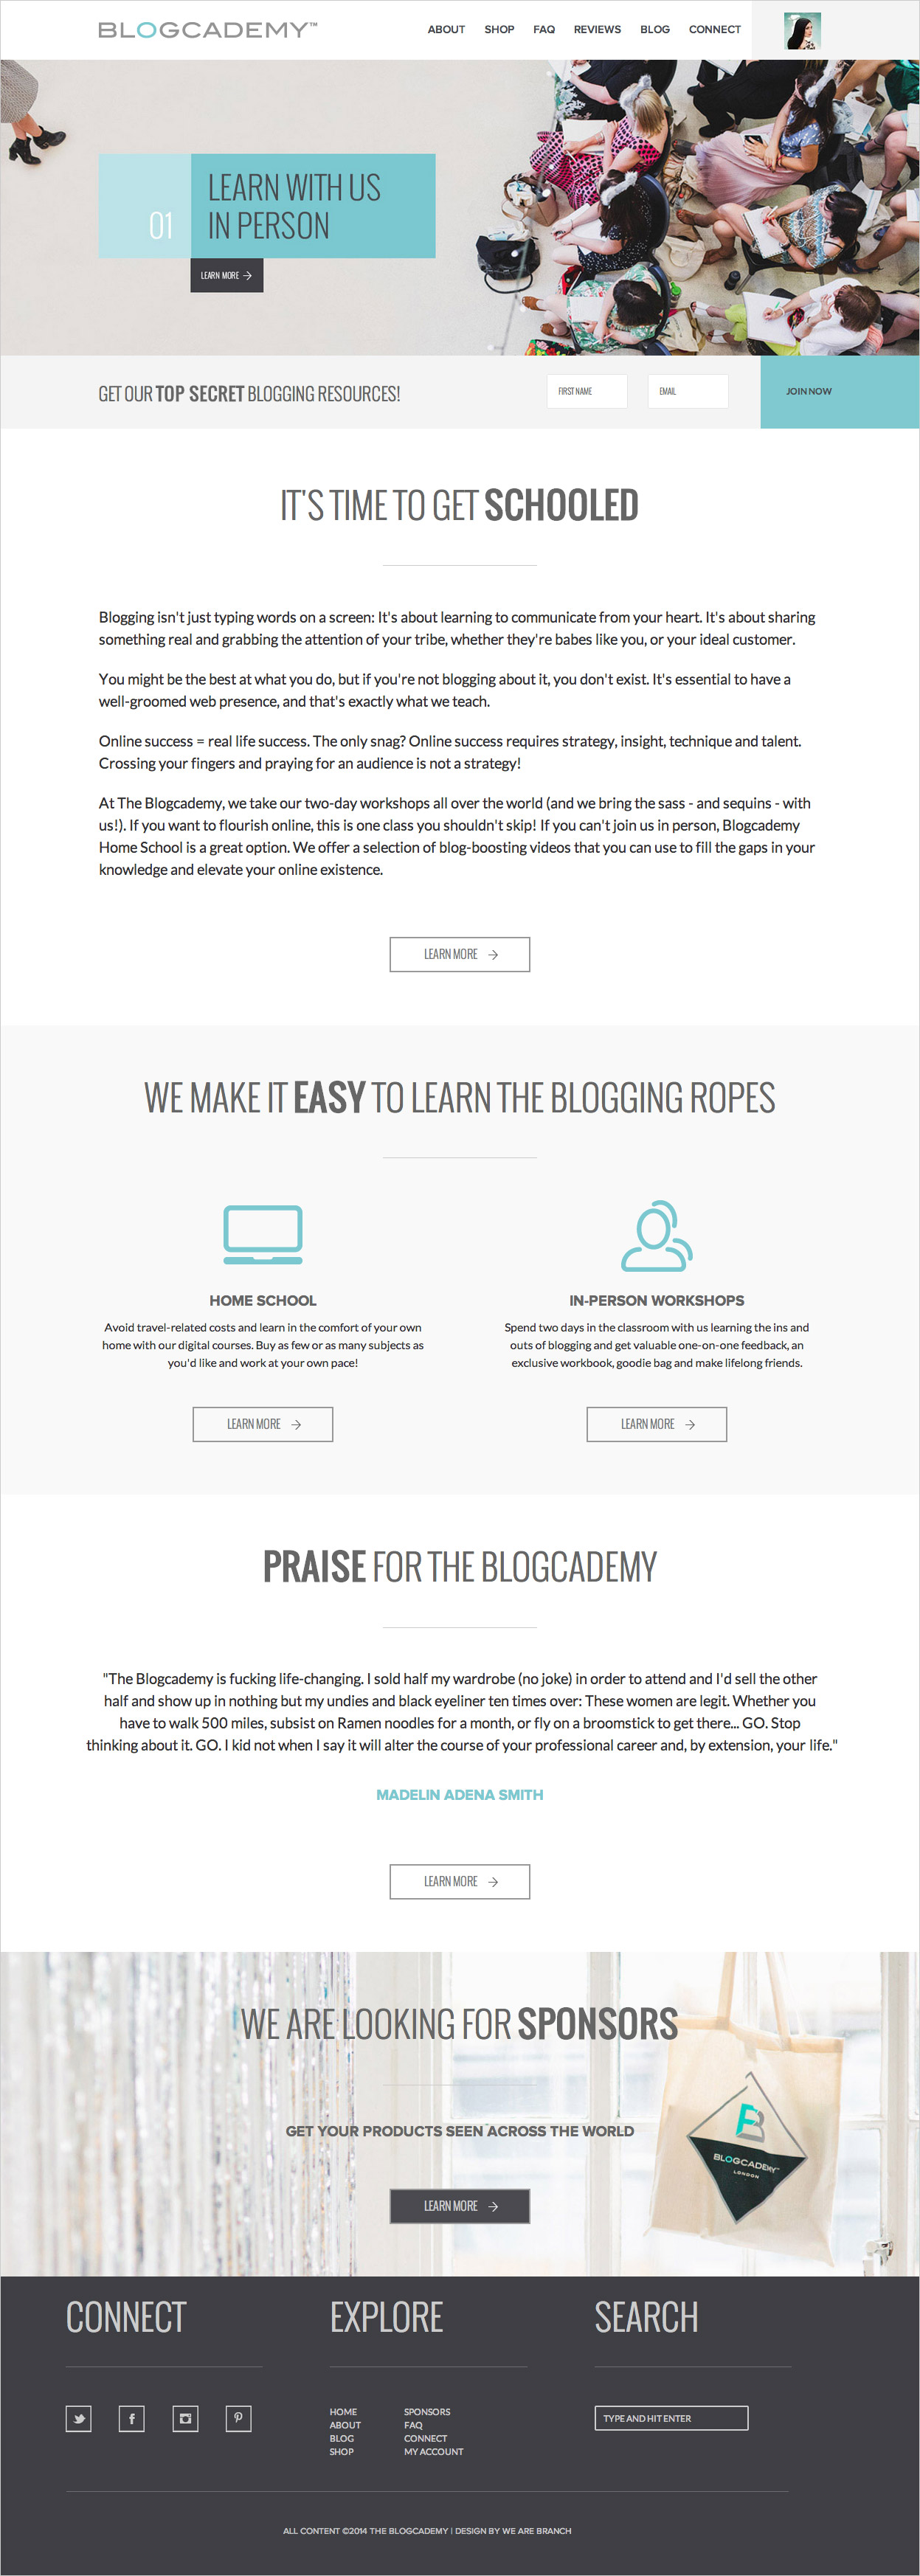 Branch | The Blogcademy Home School